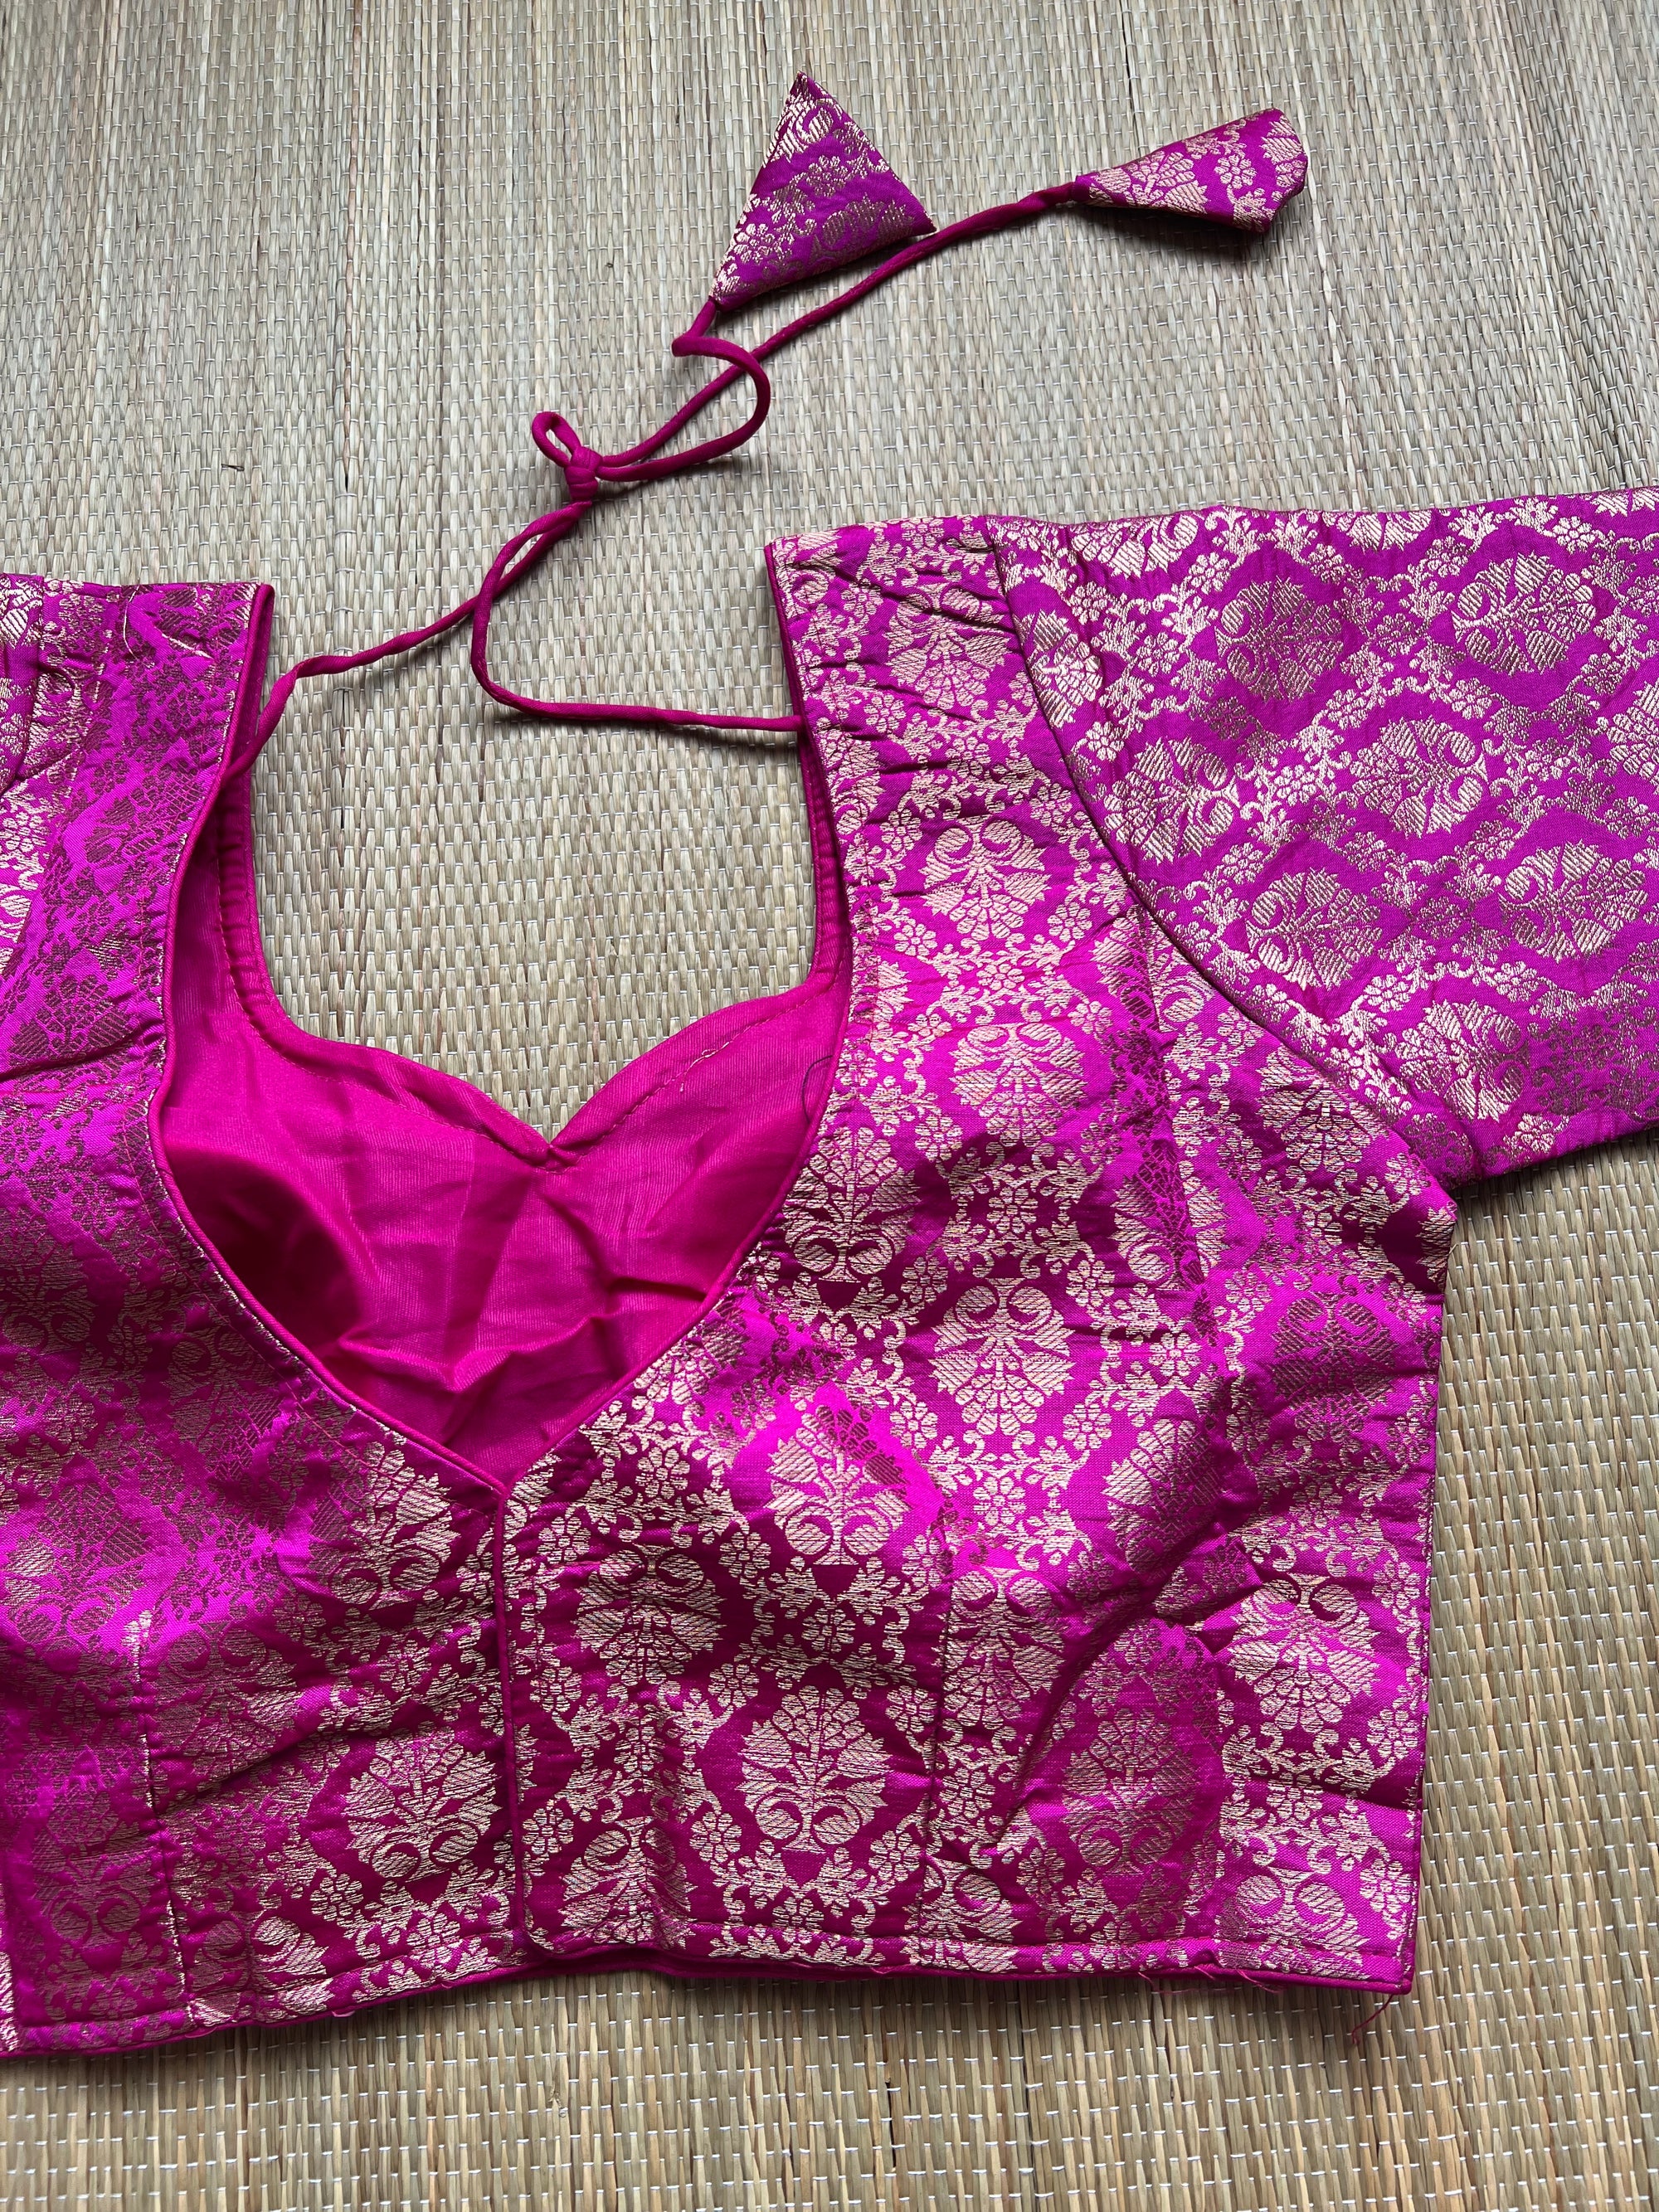 Ready Made Saree Blouse (Hot Pink)